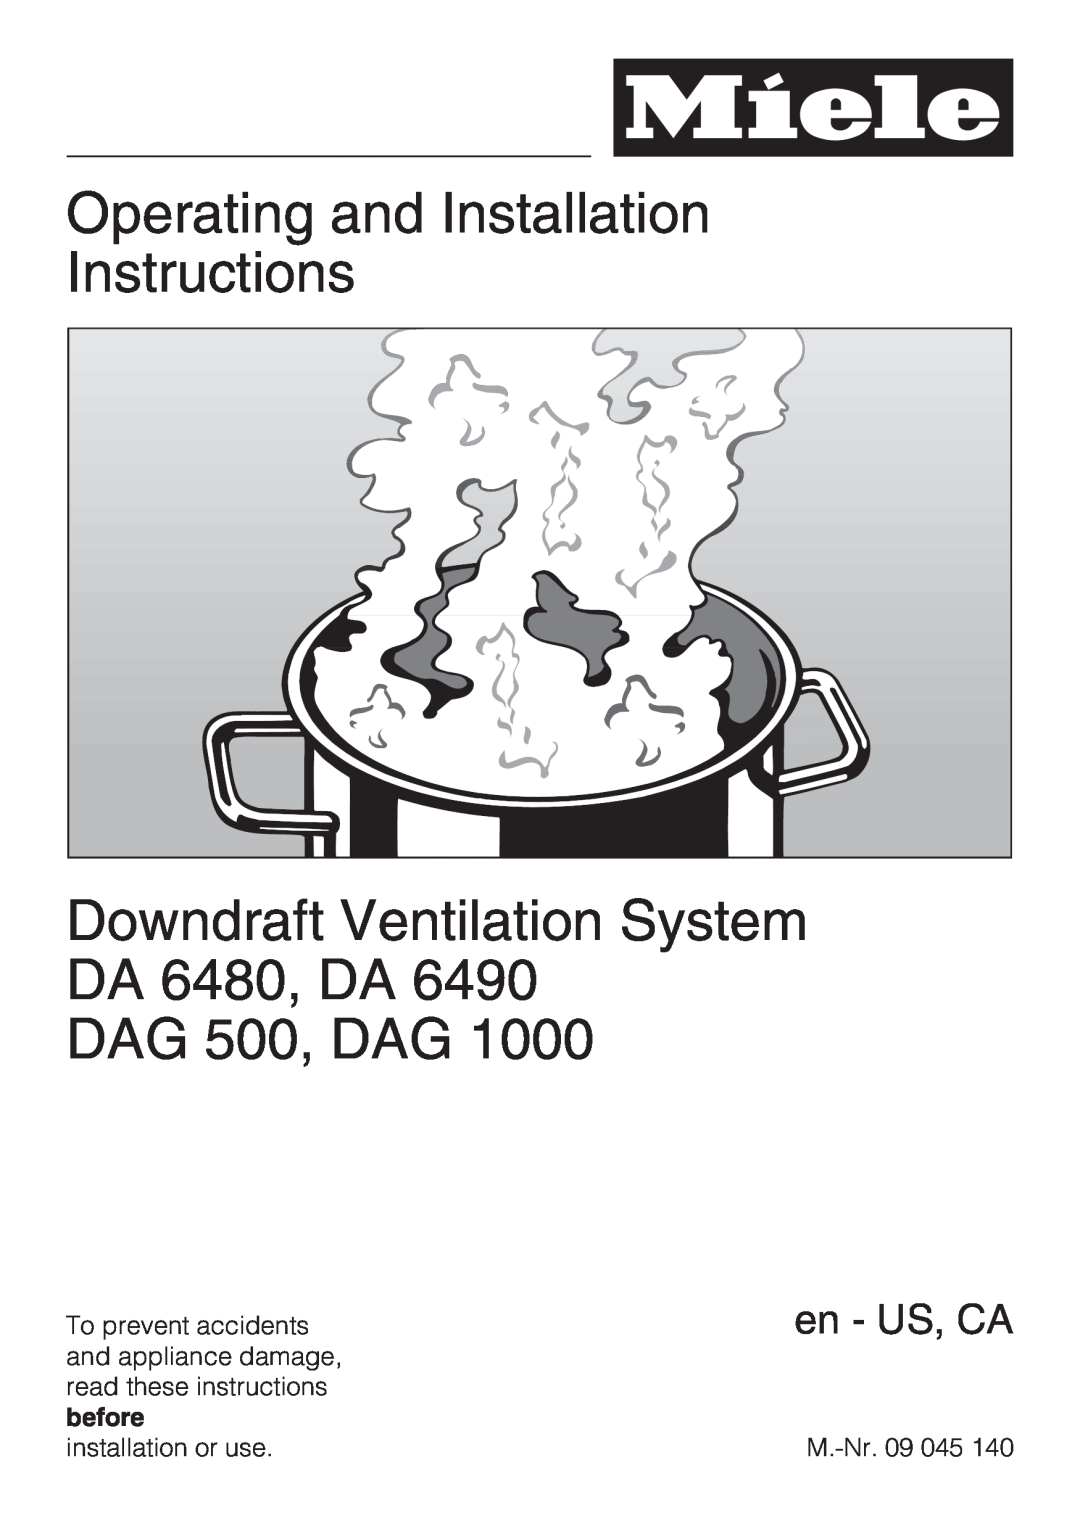 Miele installation instructions Operating and Installation Instructions, Downdraft Ventilation System DA 6480, DA 